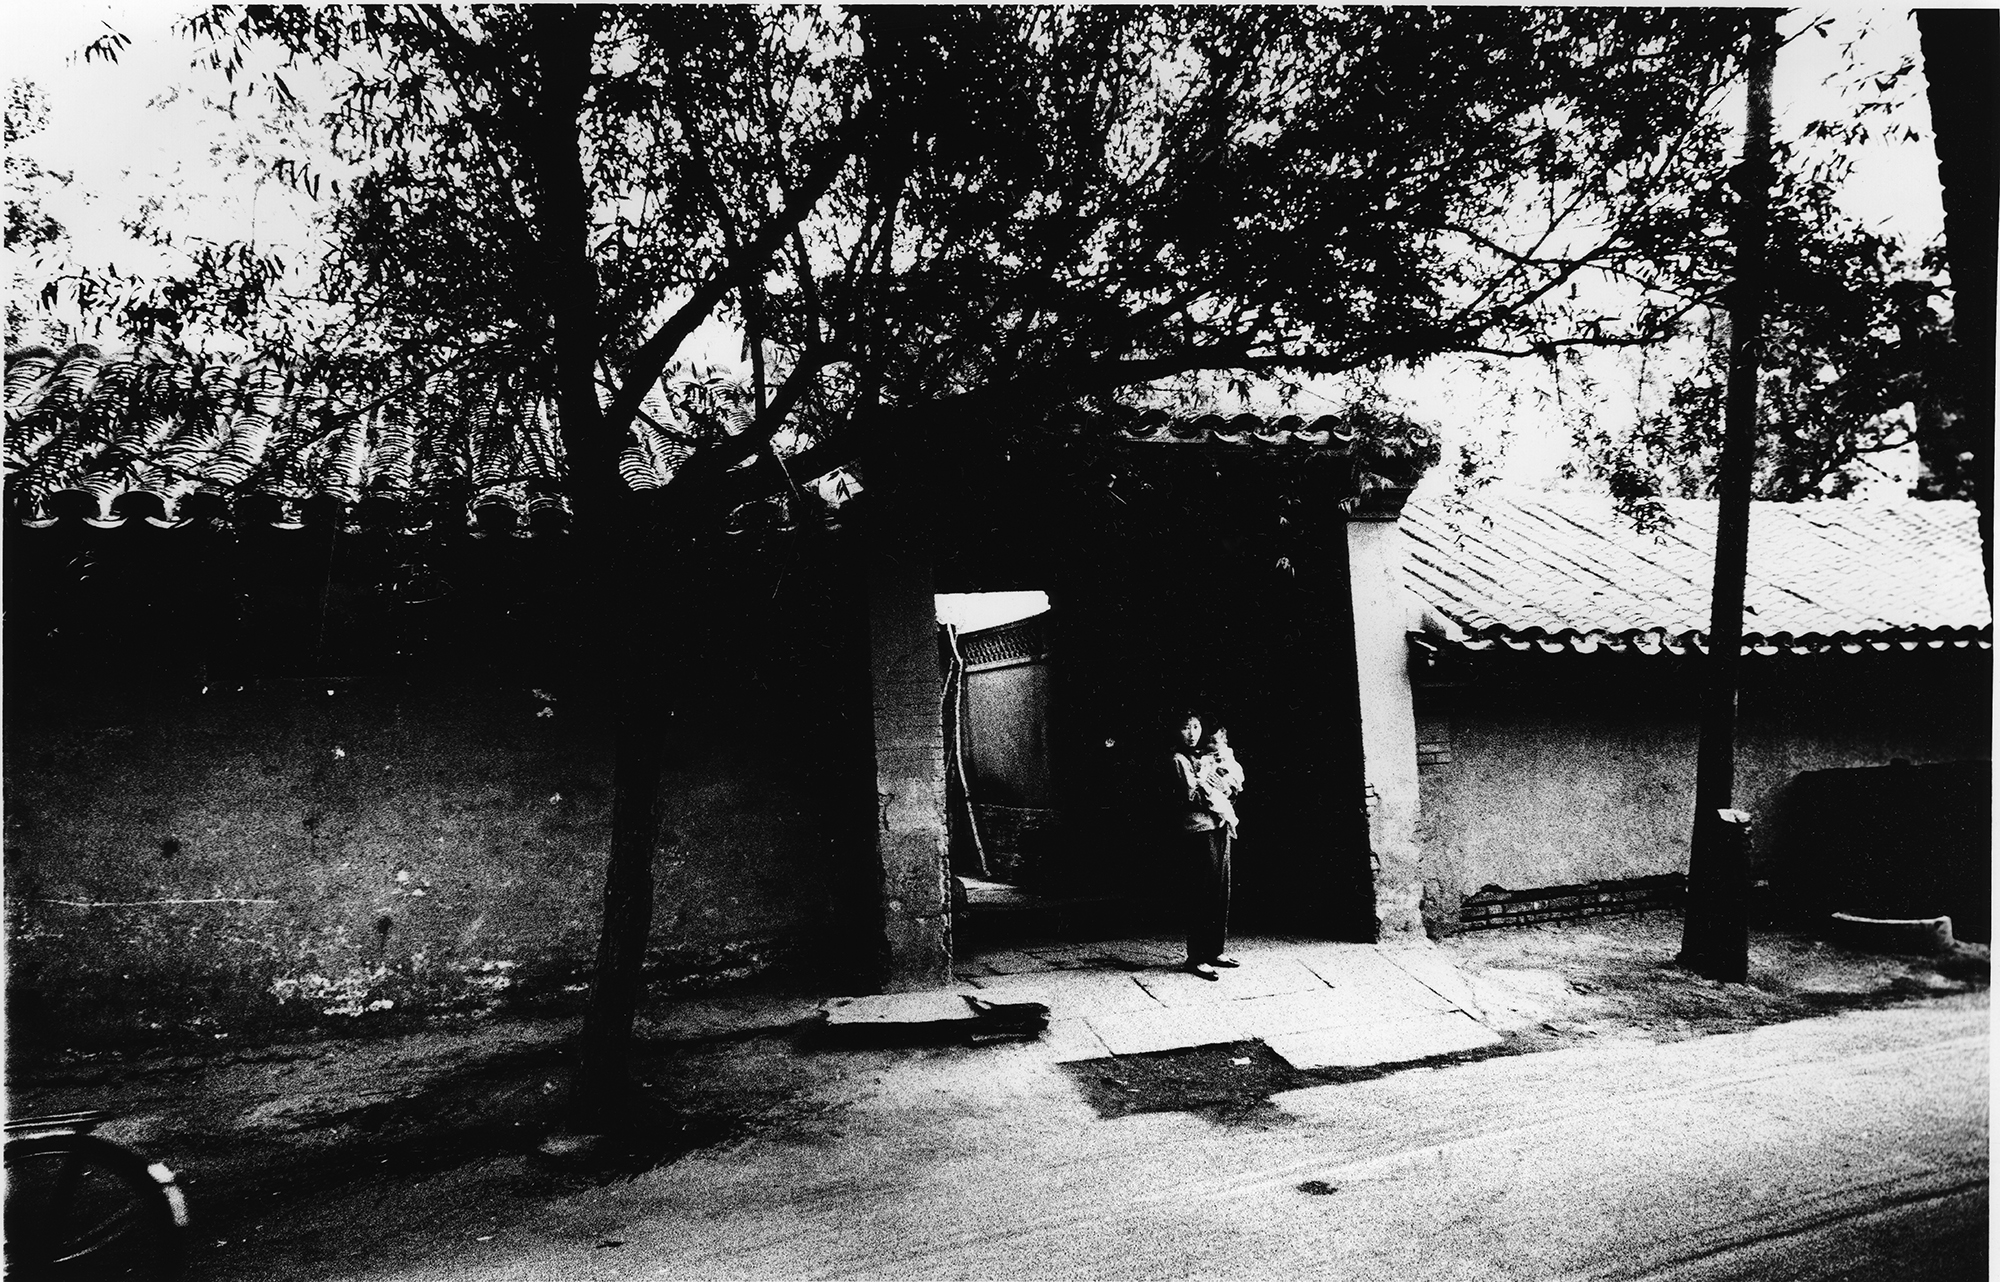 kazuo kitai china 1970s photography of china 11北京1973 - Kazuo Kitai |  - Kazuo Kitai